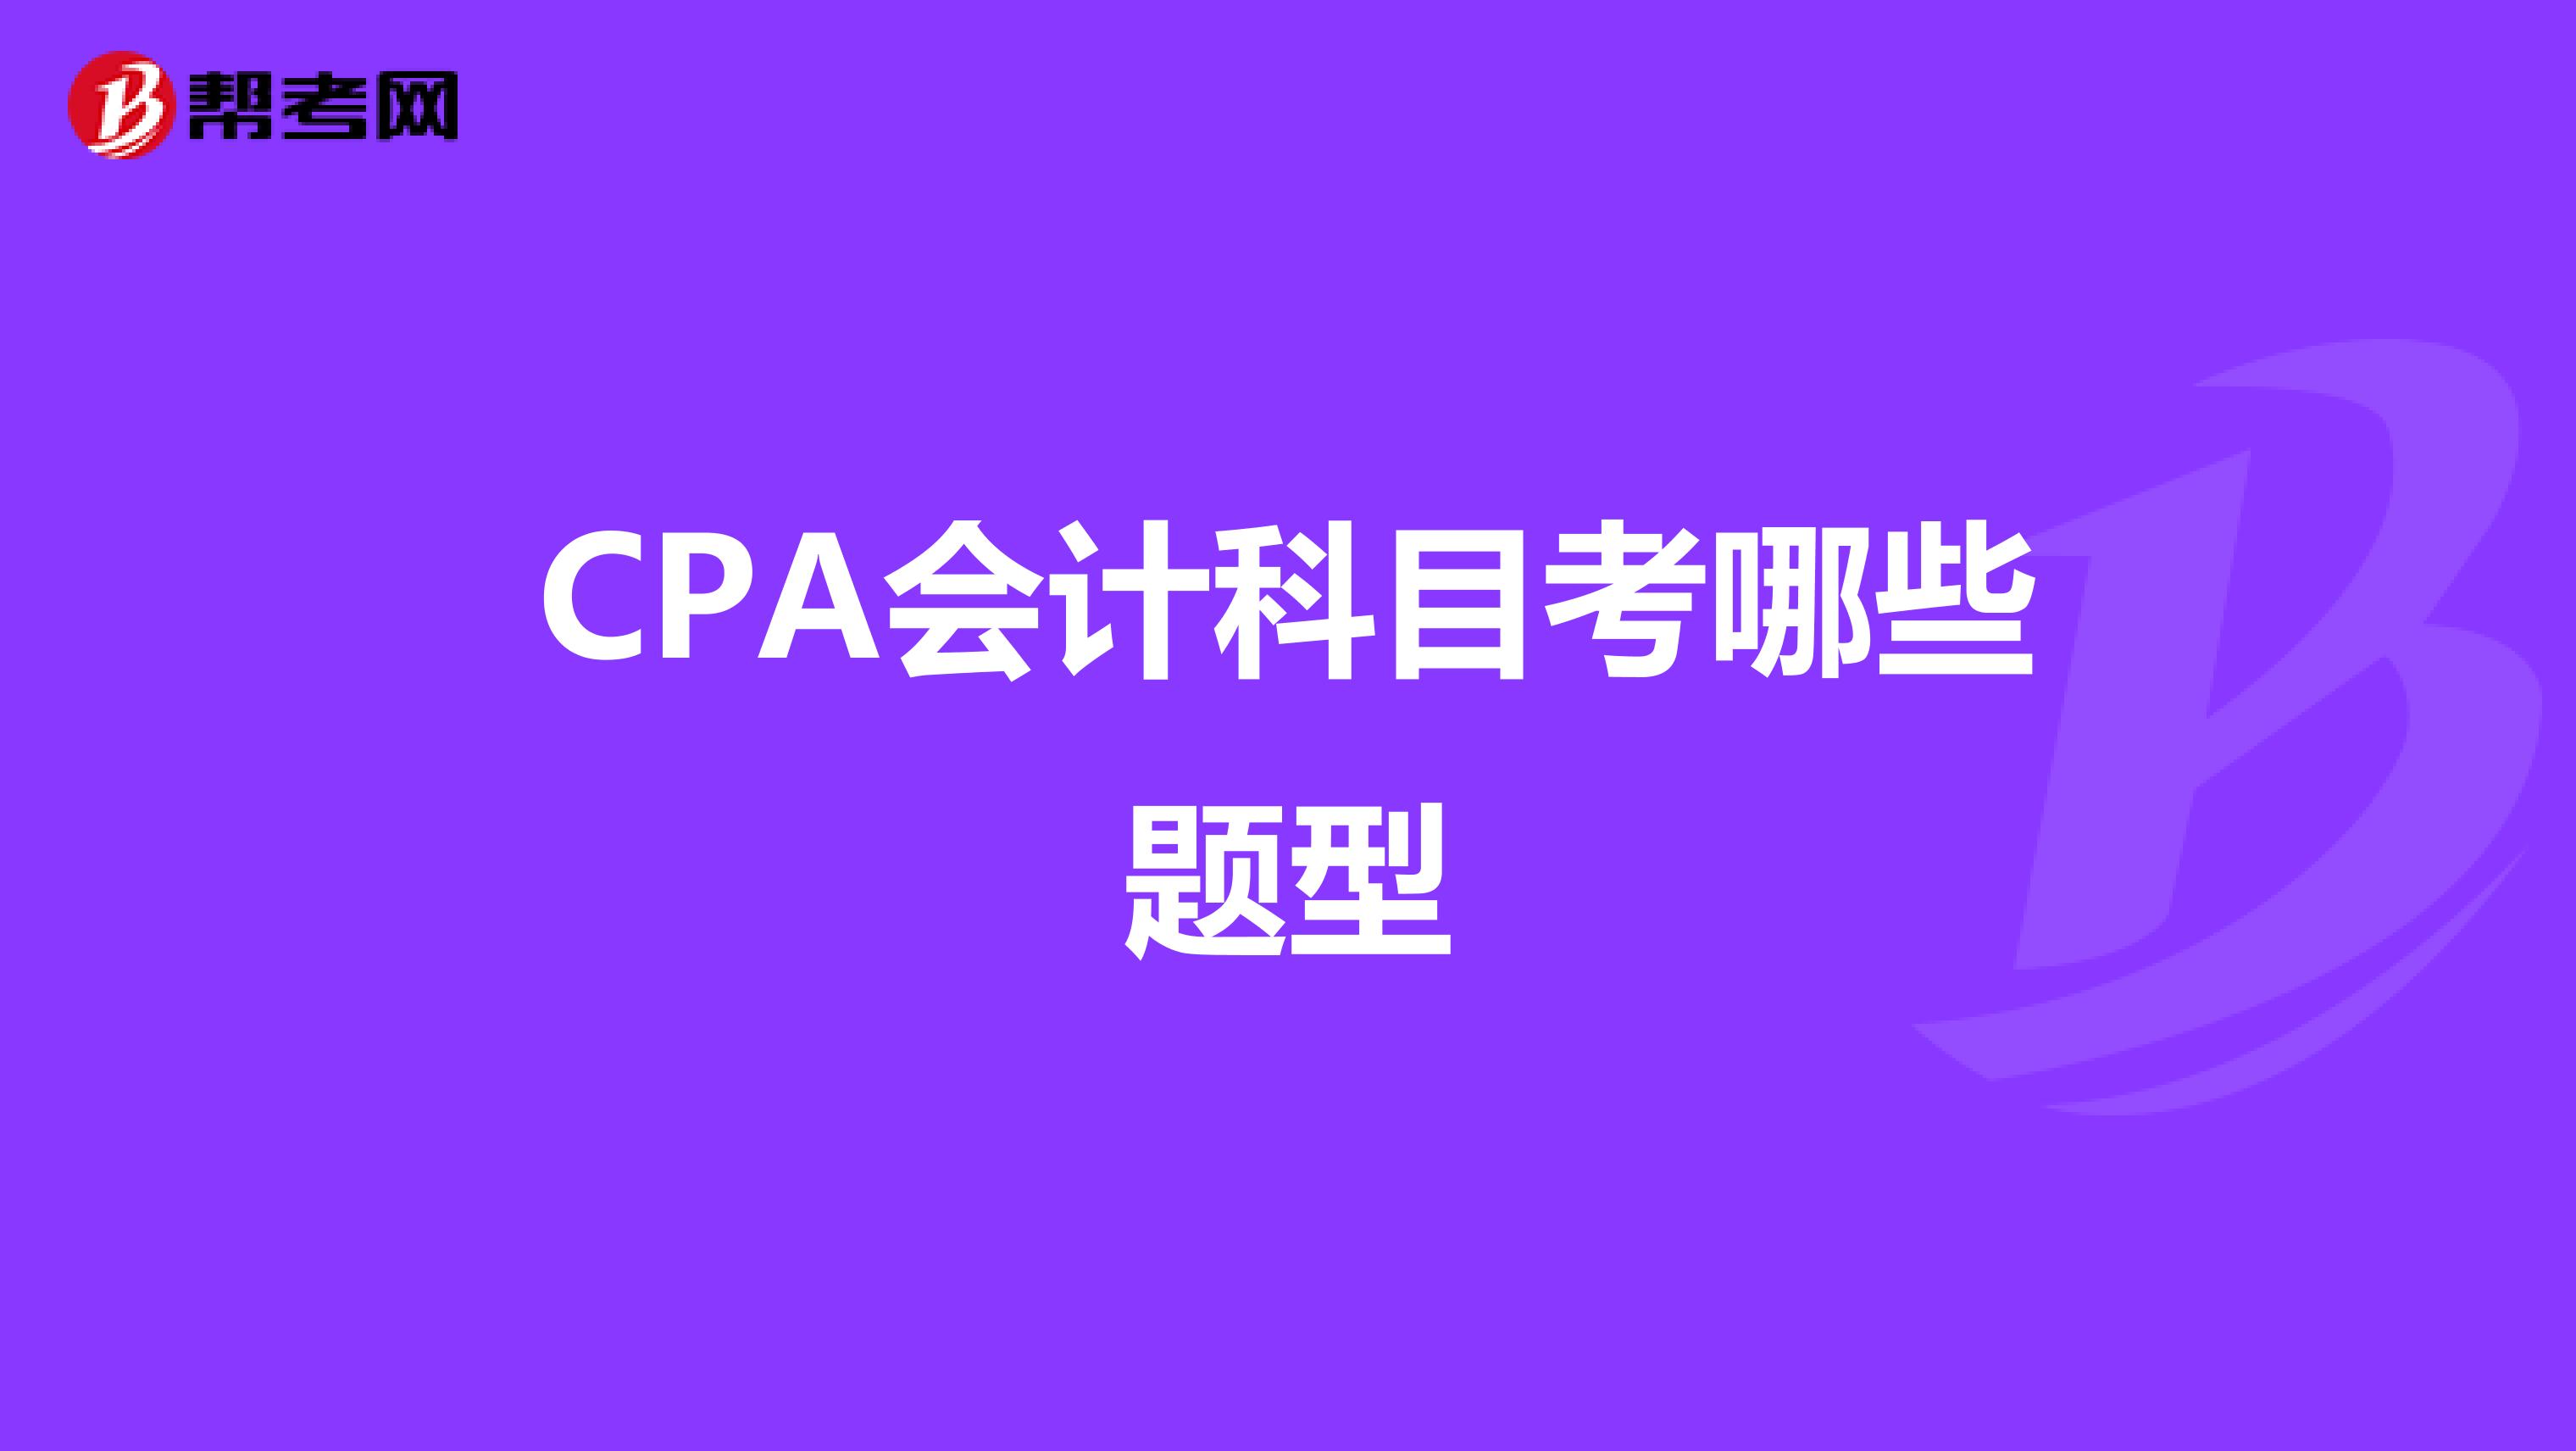 CPA会计科目考哪些题型